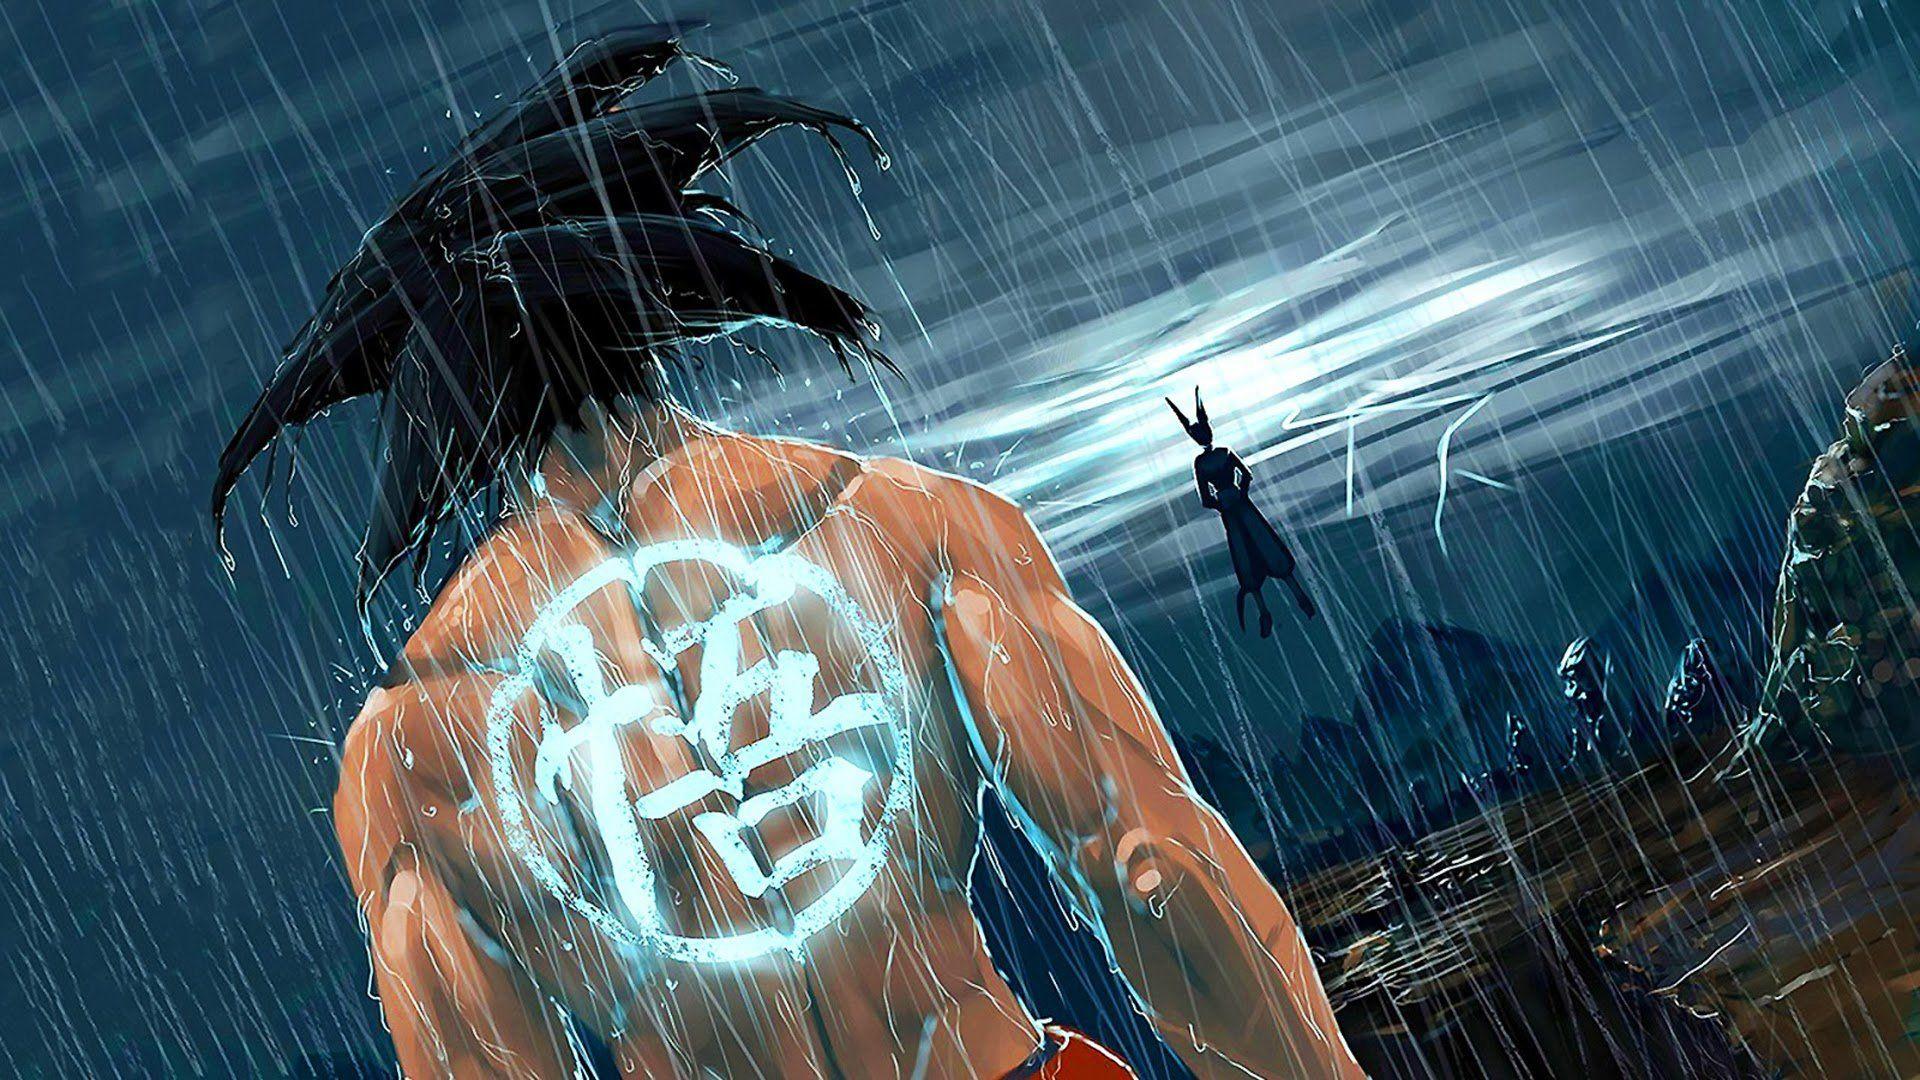 Dragon Ball Z image wallpaper broly superman darkseid doomsday